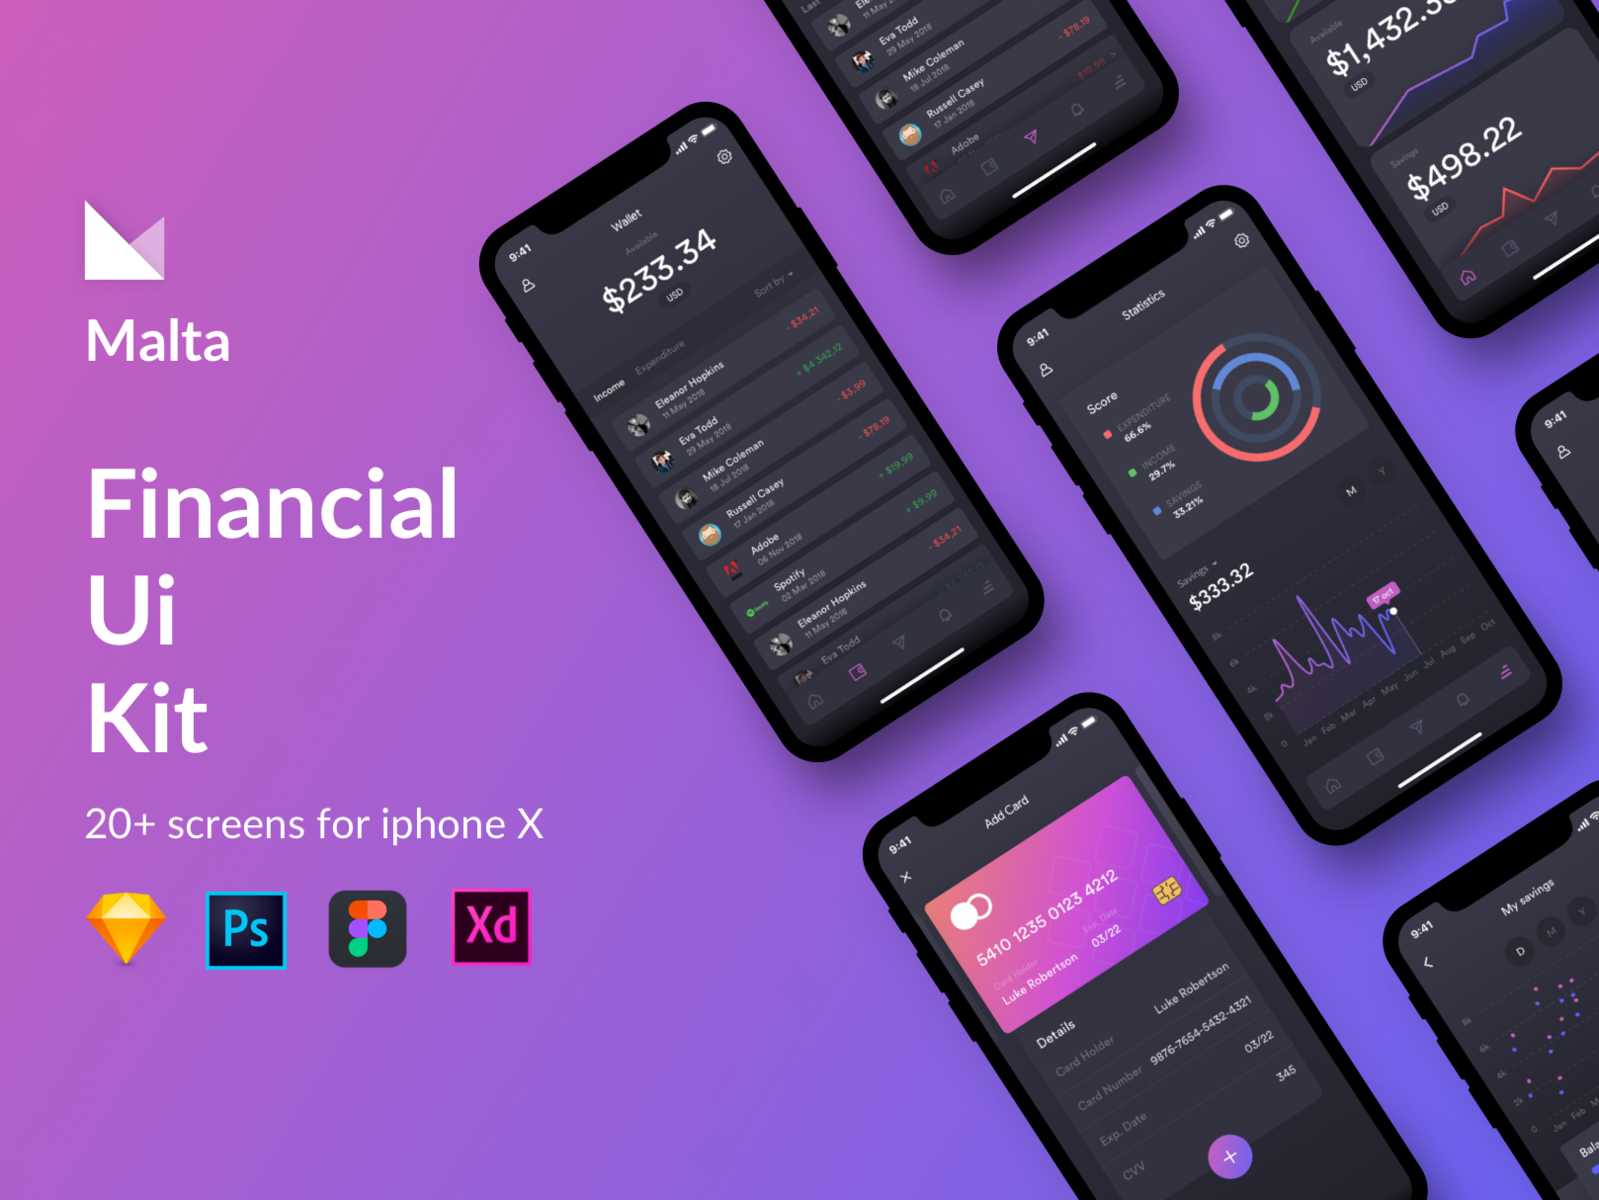 Malta Financial iOS app UI Kit